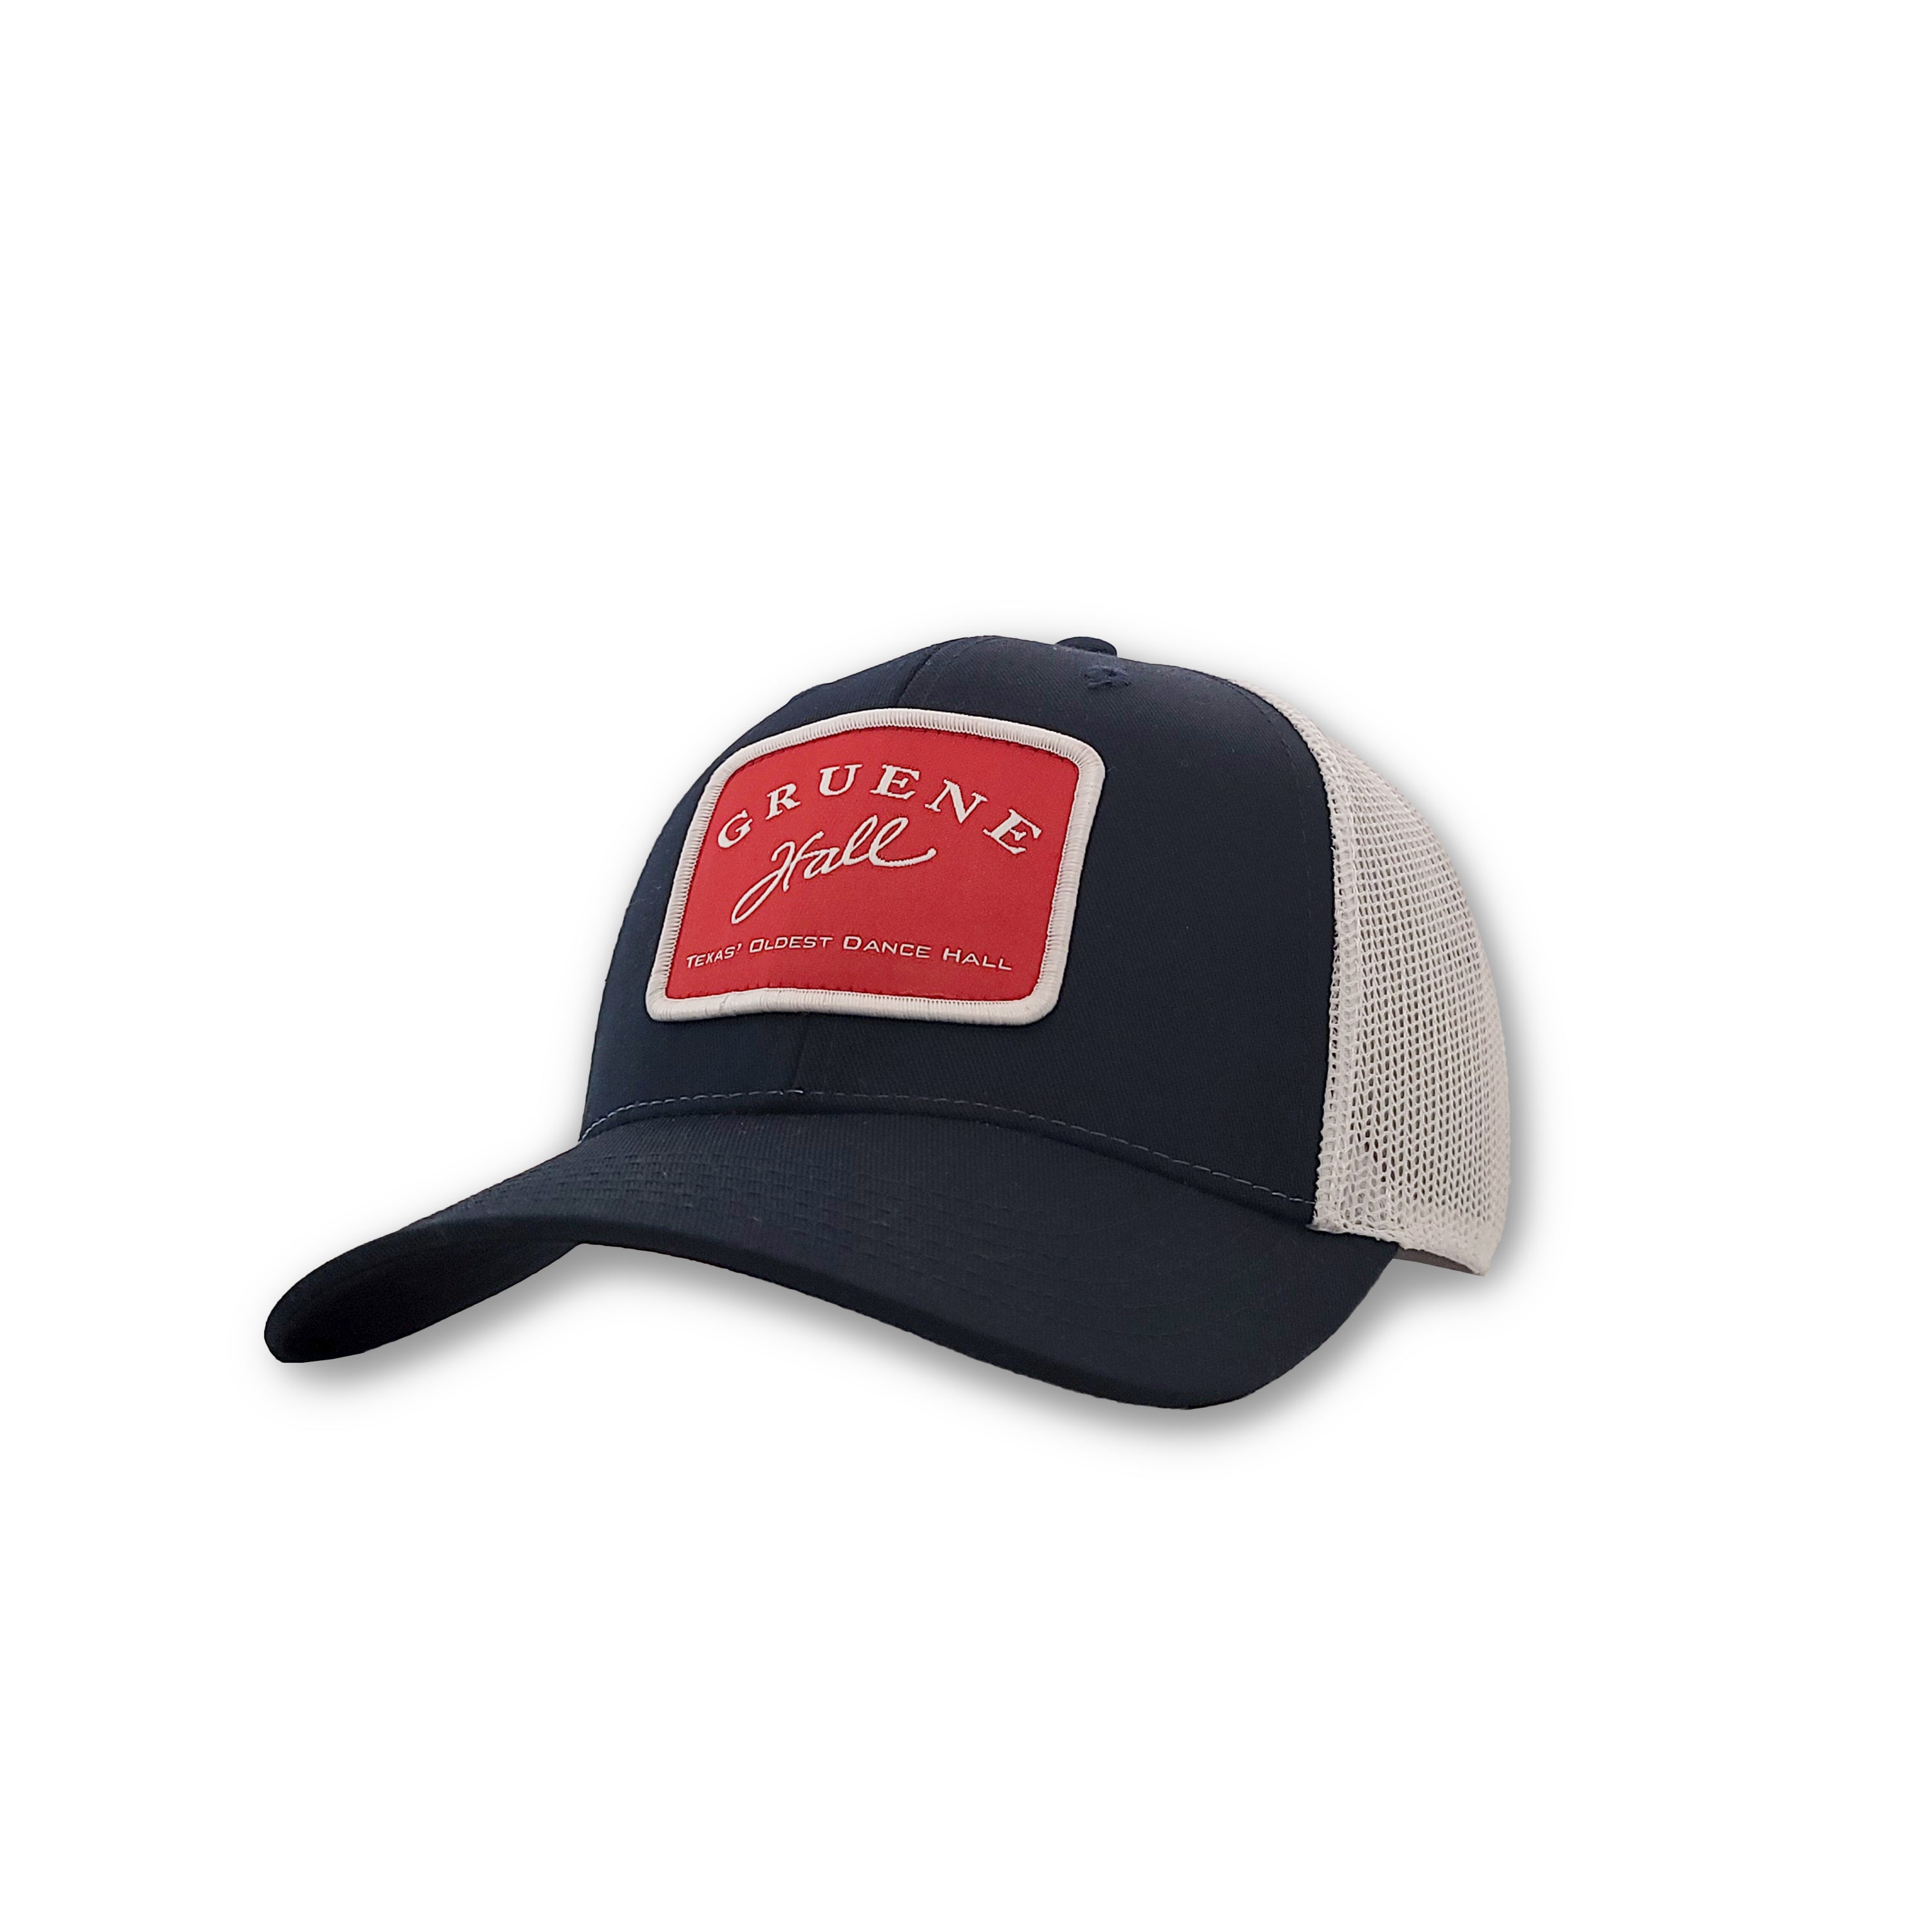 Gruene Hall Navy/Red Patch Cap #JFI-22450